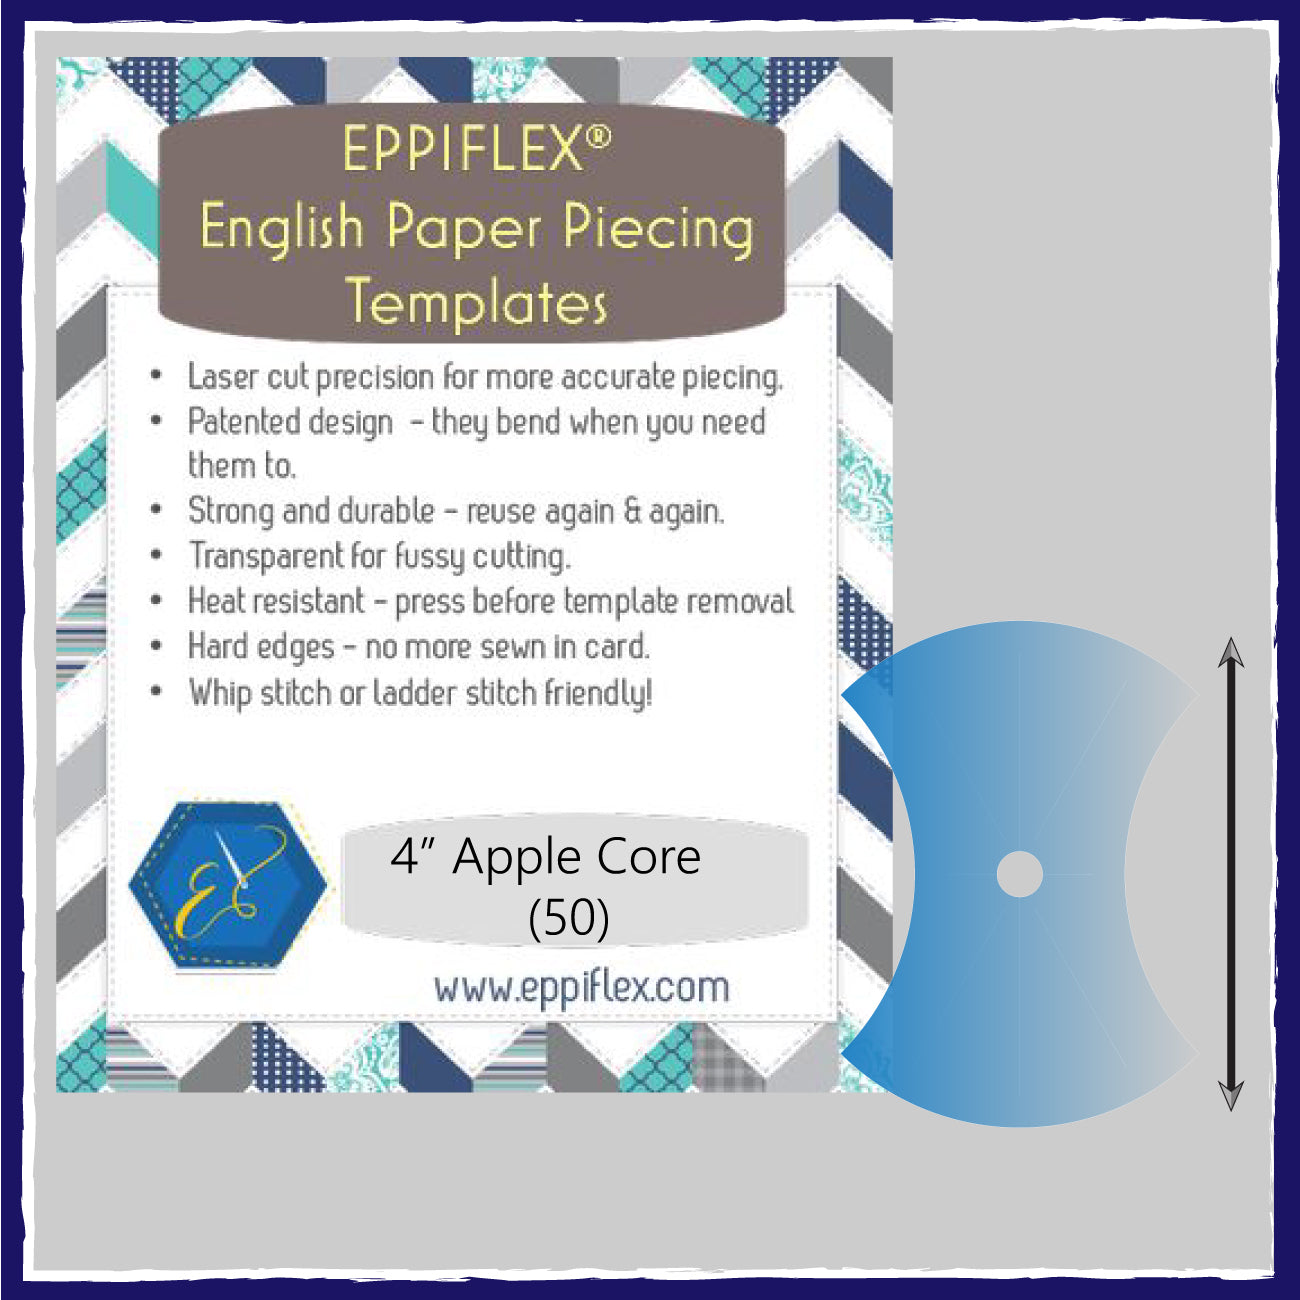 Eppiflex Applecore Templates